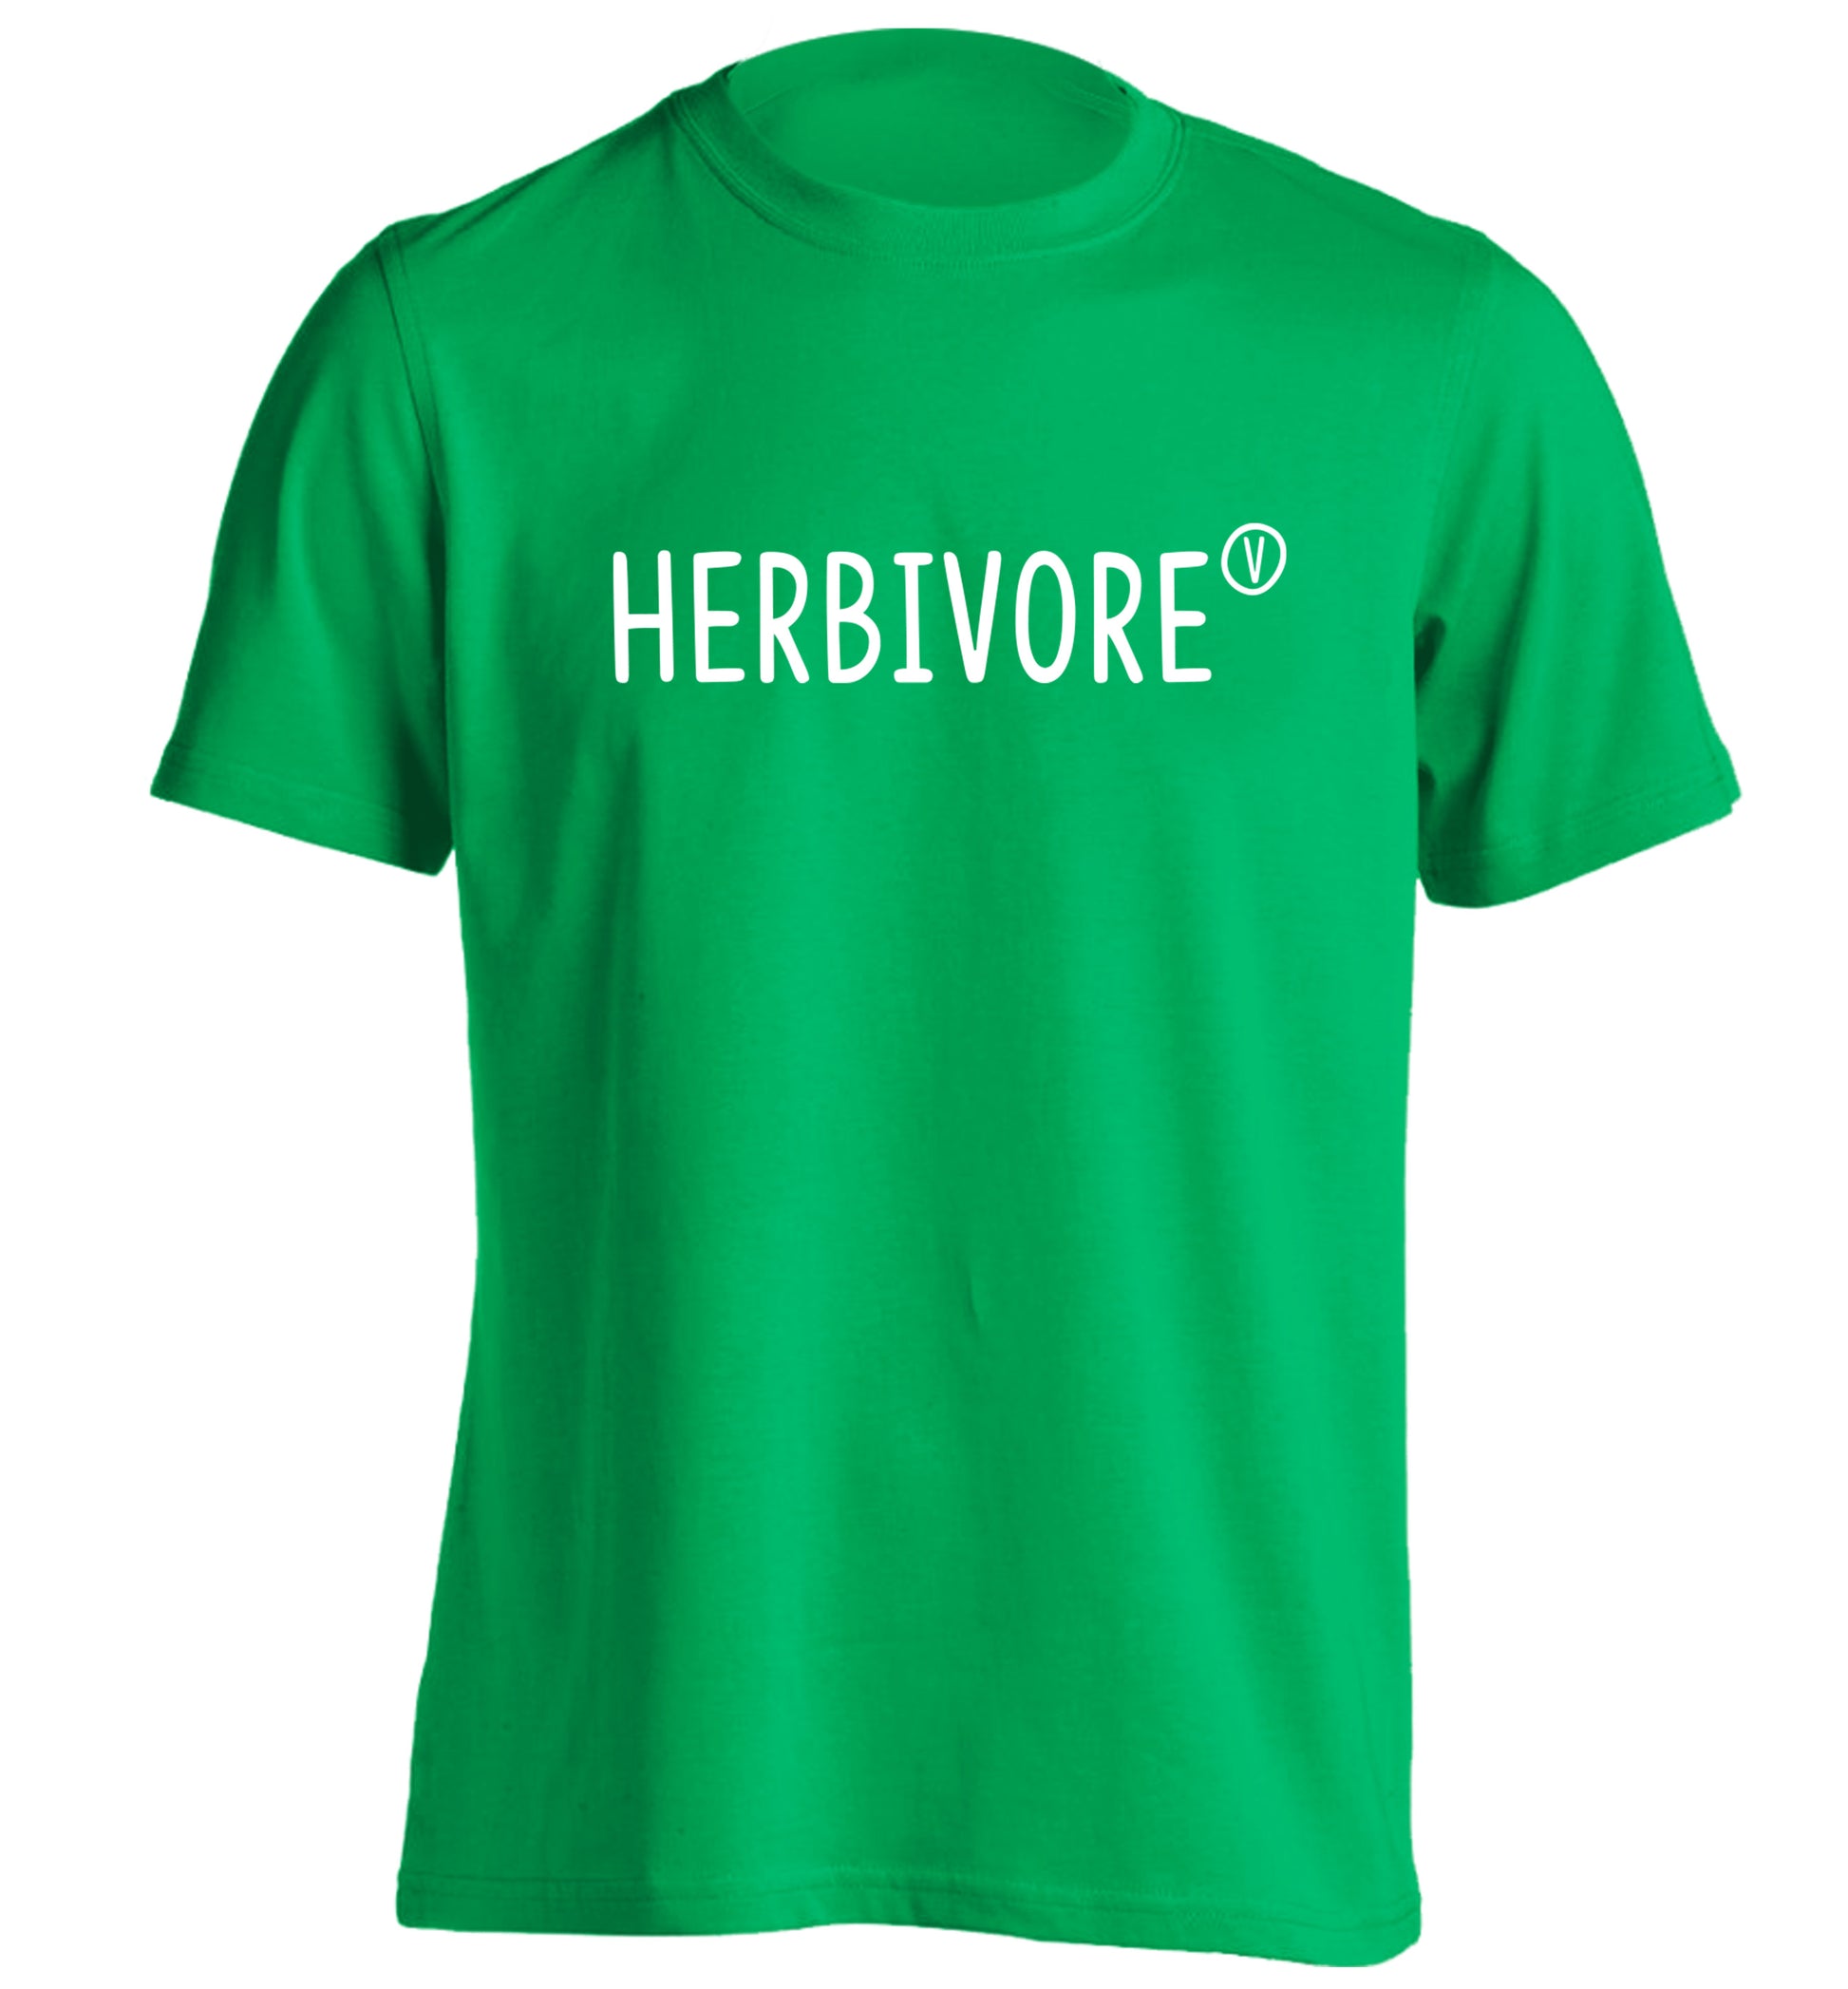 Herbivore adults unisex green Tshirt 2XL